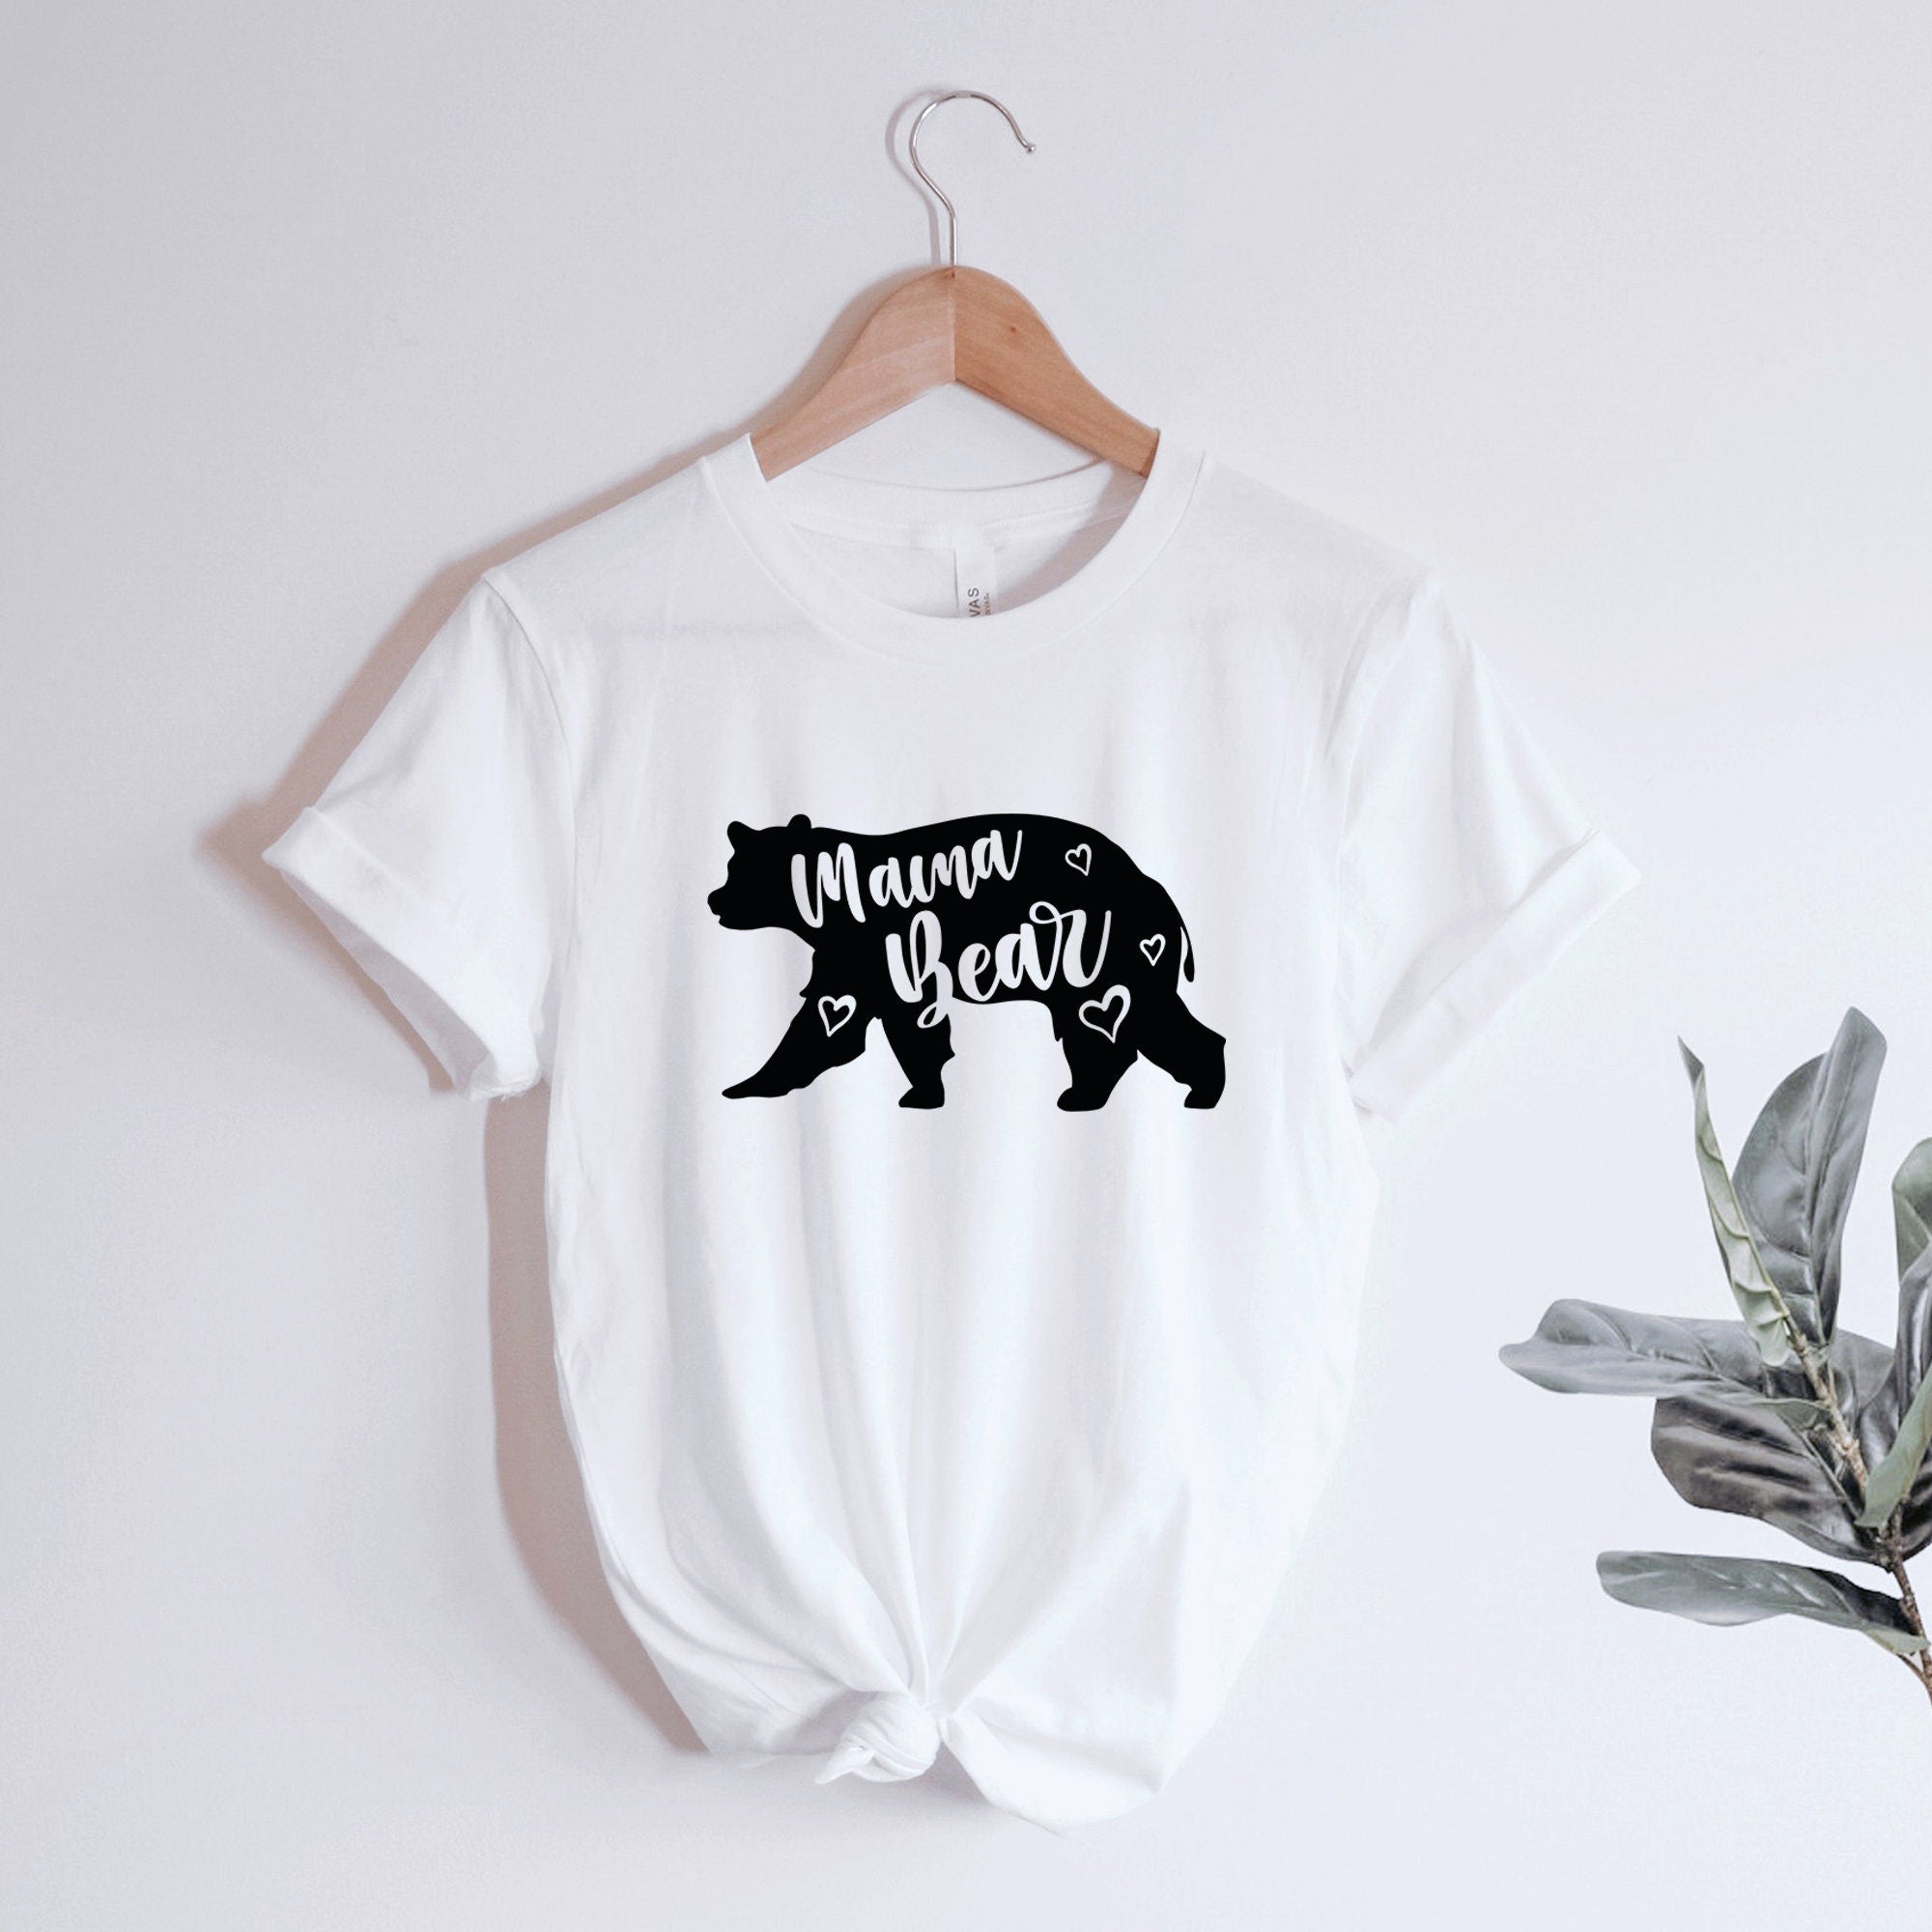 Mama Bear Shirt, Mom Shirts, Mom-life Shirt, Shirts for Moms, Trendy Mom T-Shirts, Cool Mom Shirts, Shirts for Moms